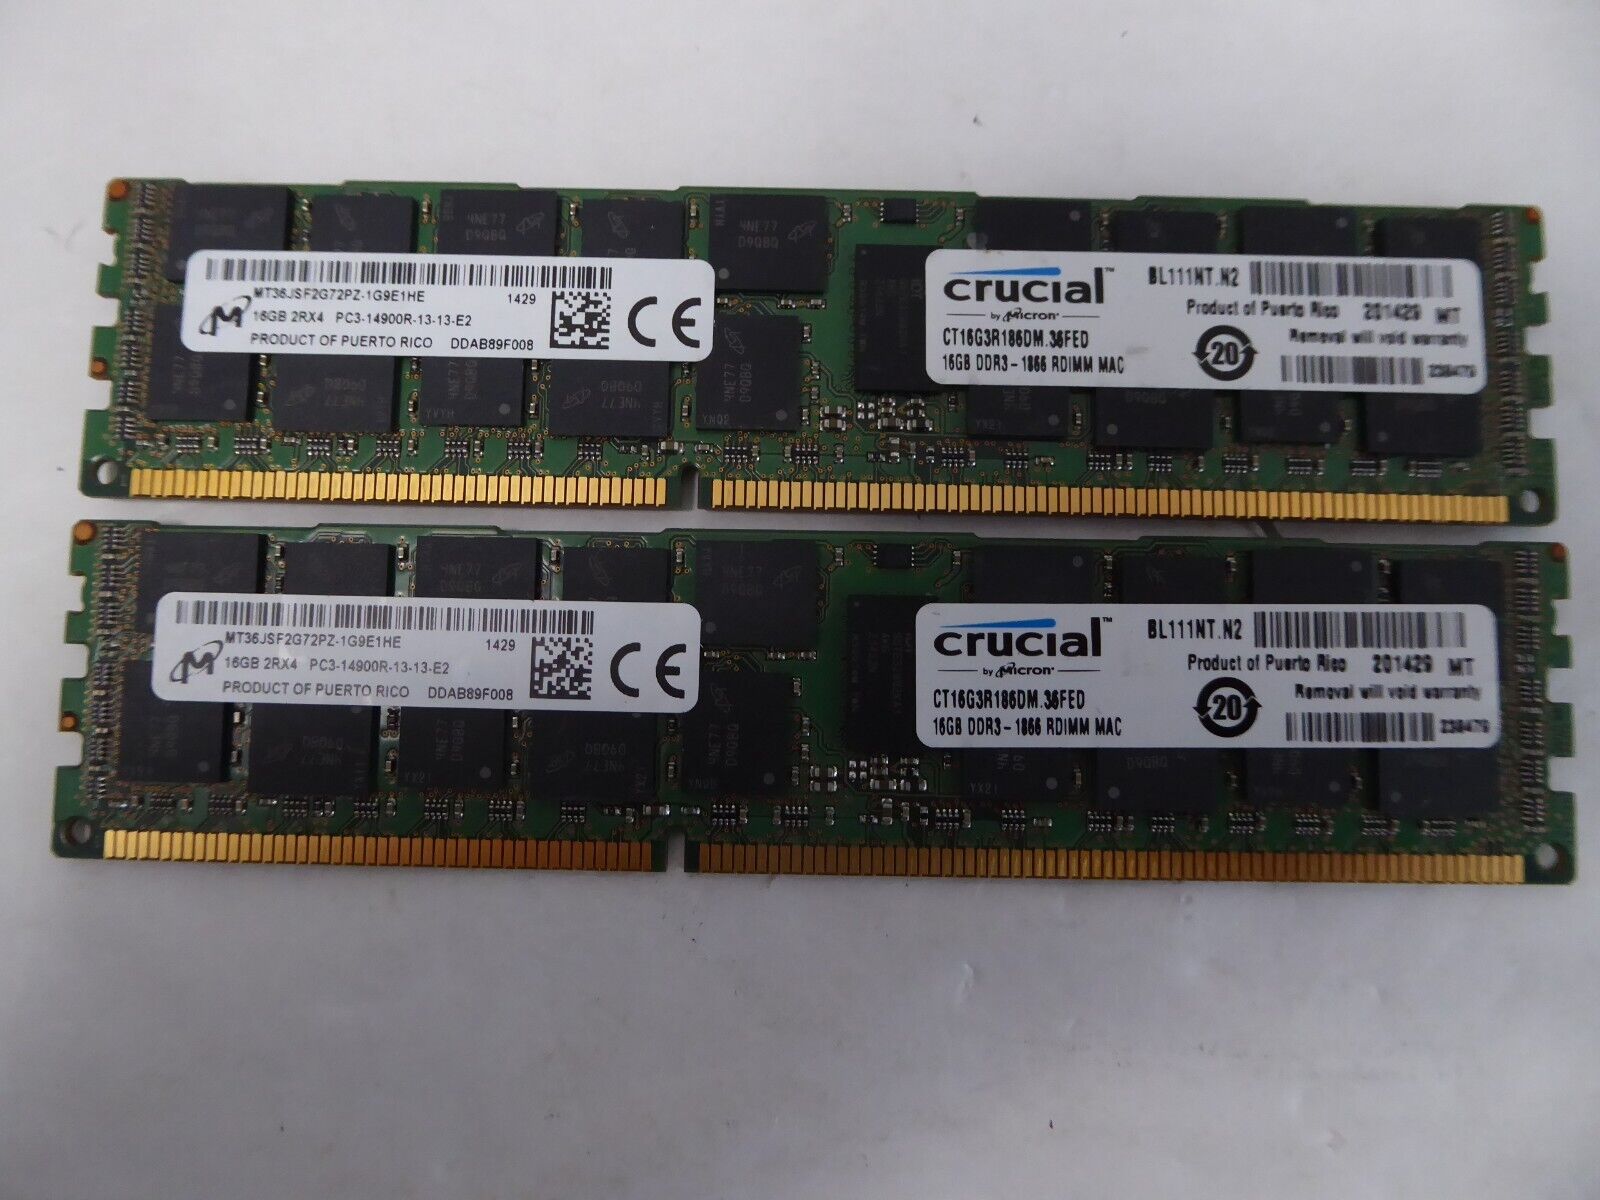 Lof of 2 Crucial Micron MT36JSF2GT2PZ-1G9E1HE DDR3-1866 16GB Memory RAM